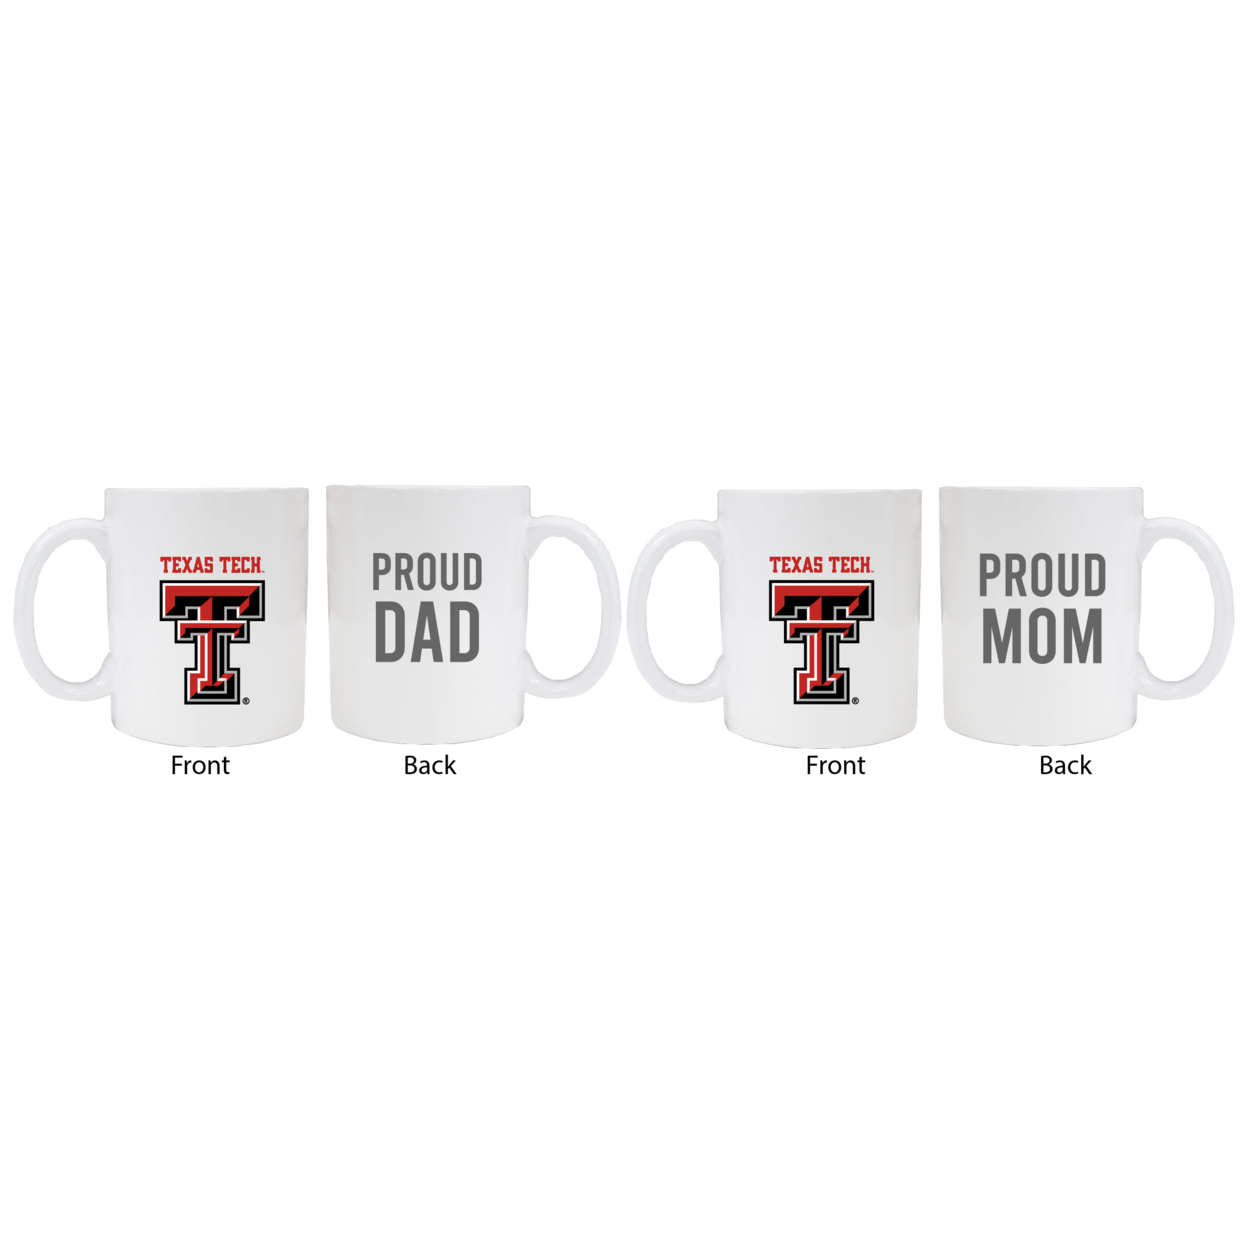 Texas Tech Red Raiders Proud Mom And Dad White Ceramic Coffee Mug 2 Pack (White).